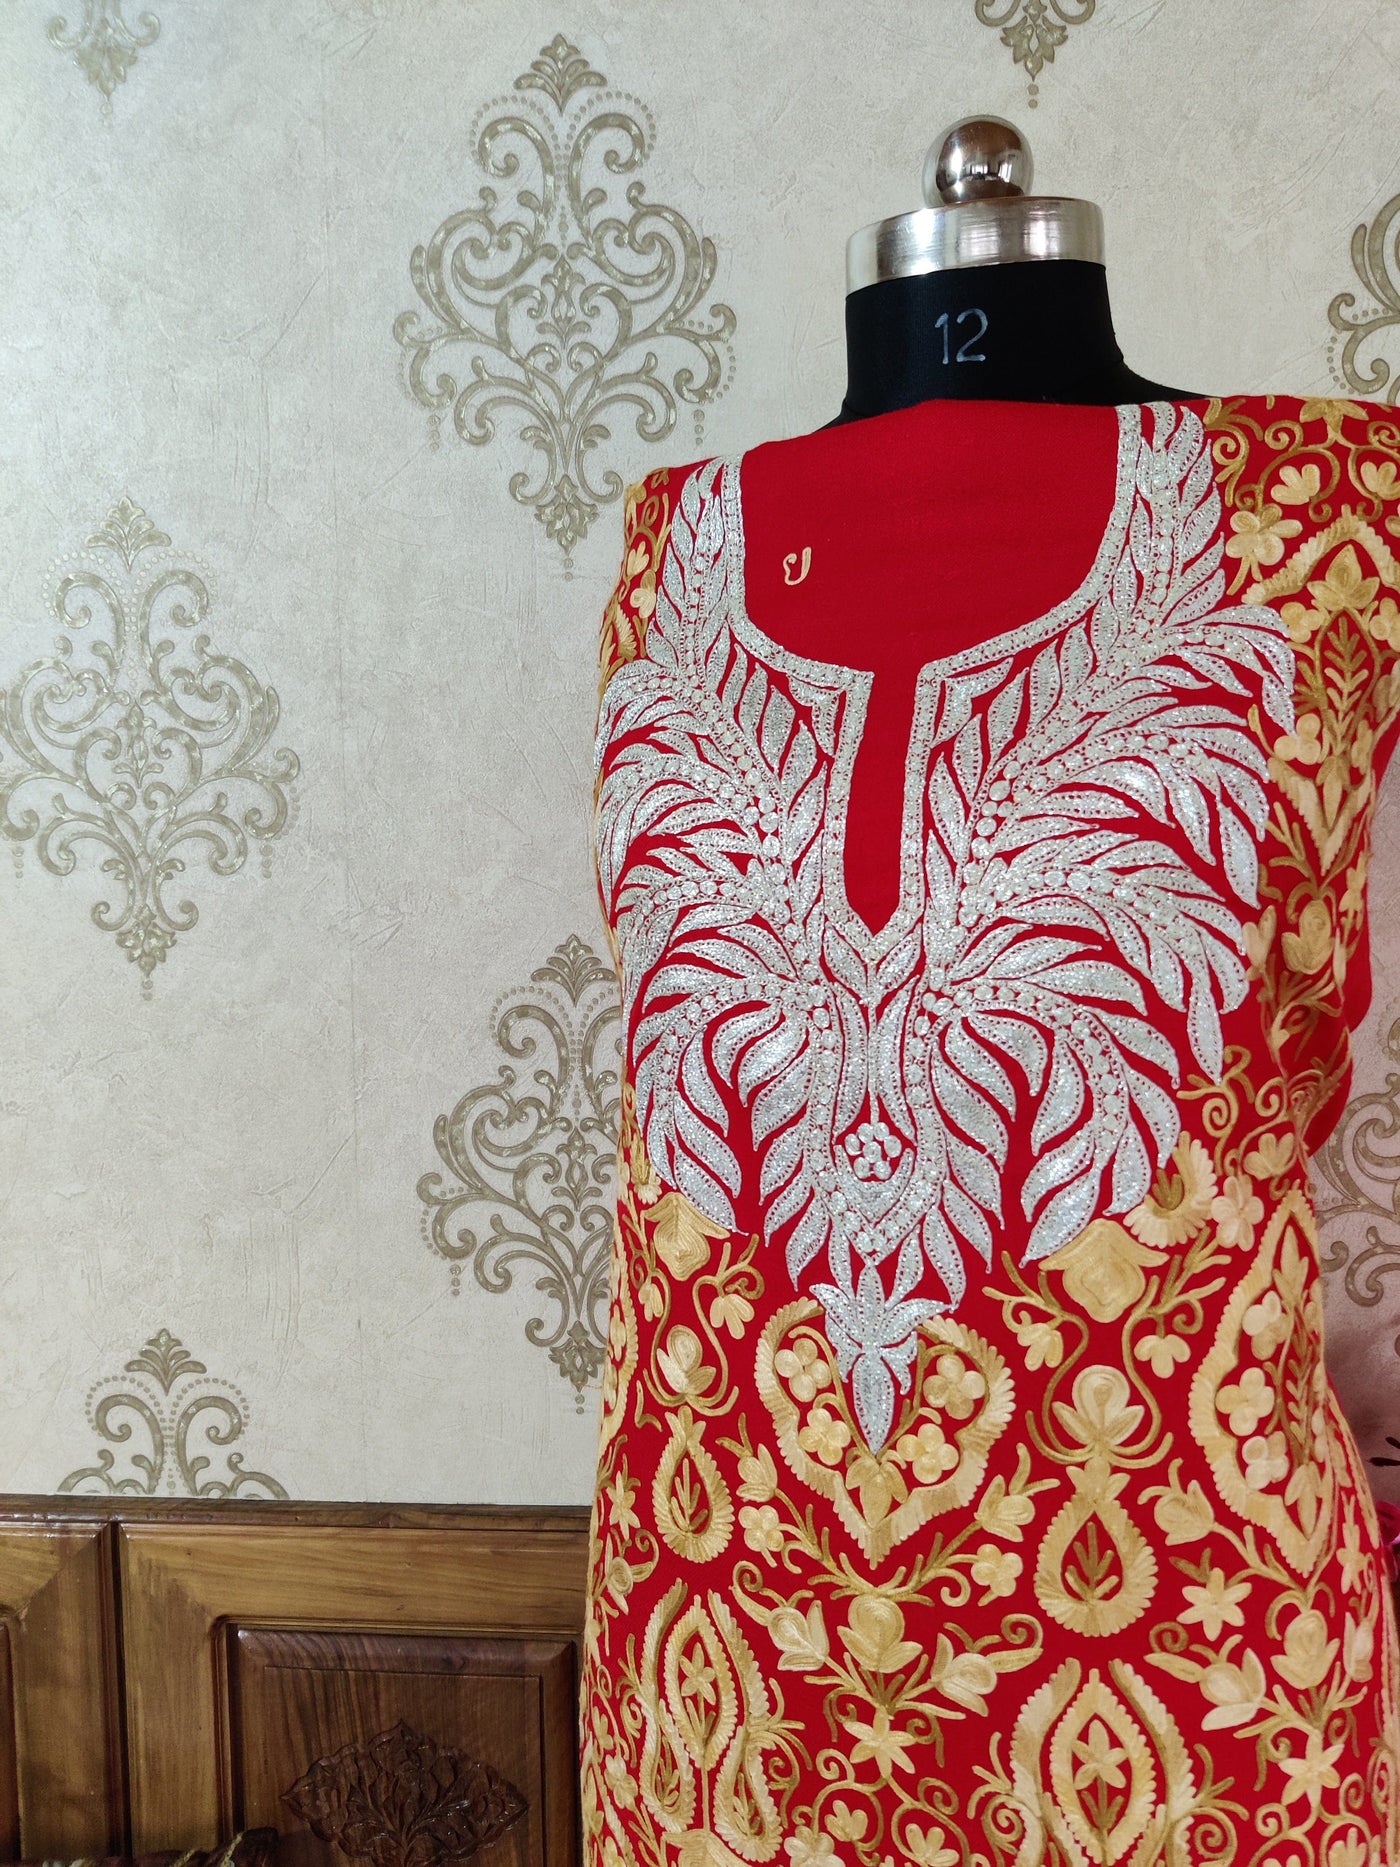 Woollen Kashmiri Suit With Aari plus Tilla Embroidery (3 pcs) Woolen Suit KashmKari MaroonKashmiri Woollen Suit With Tilla Embroidery jaal design (3 pcs).  Kashmiri Suit online